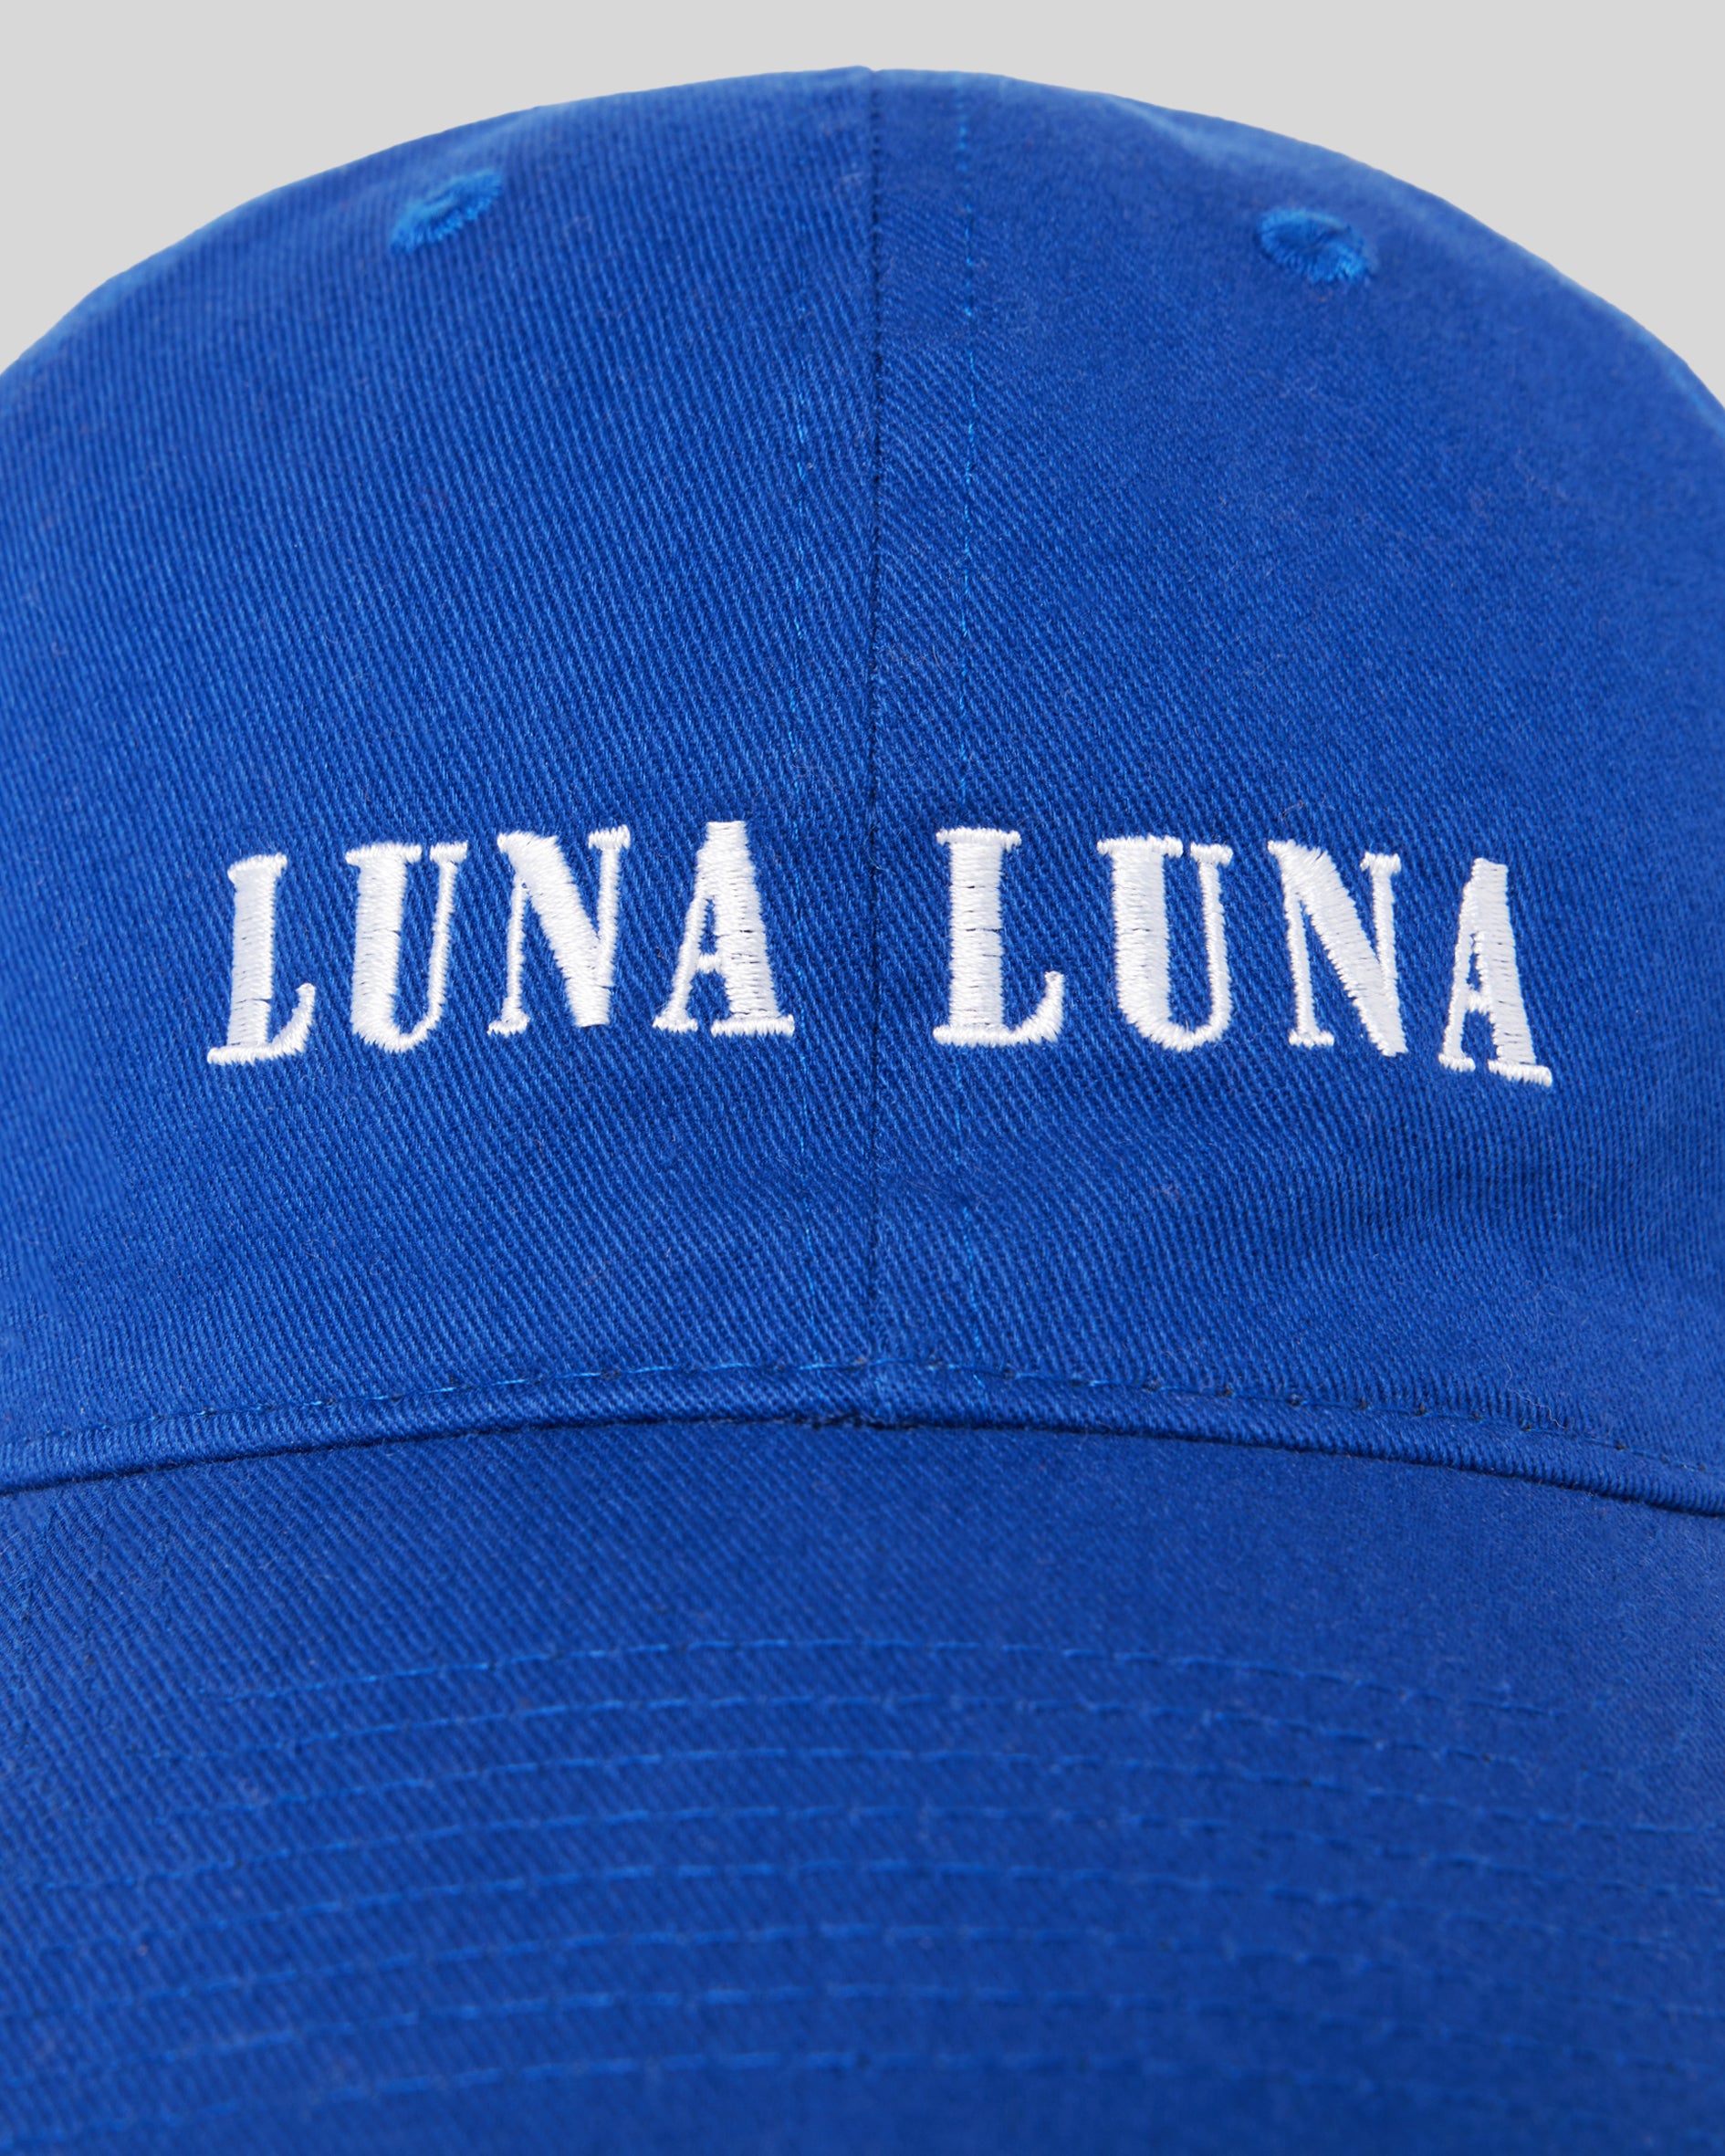 1987 Logo Hat, Cobalt Blue. Detail photograph of cobalt blue baseball hat with white Luna Luna embroidered text at front.